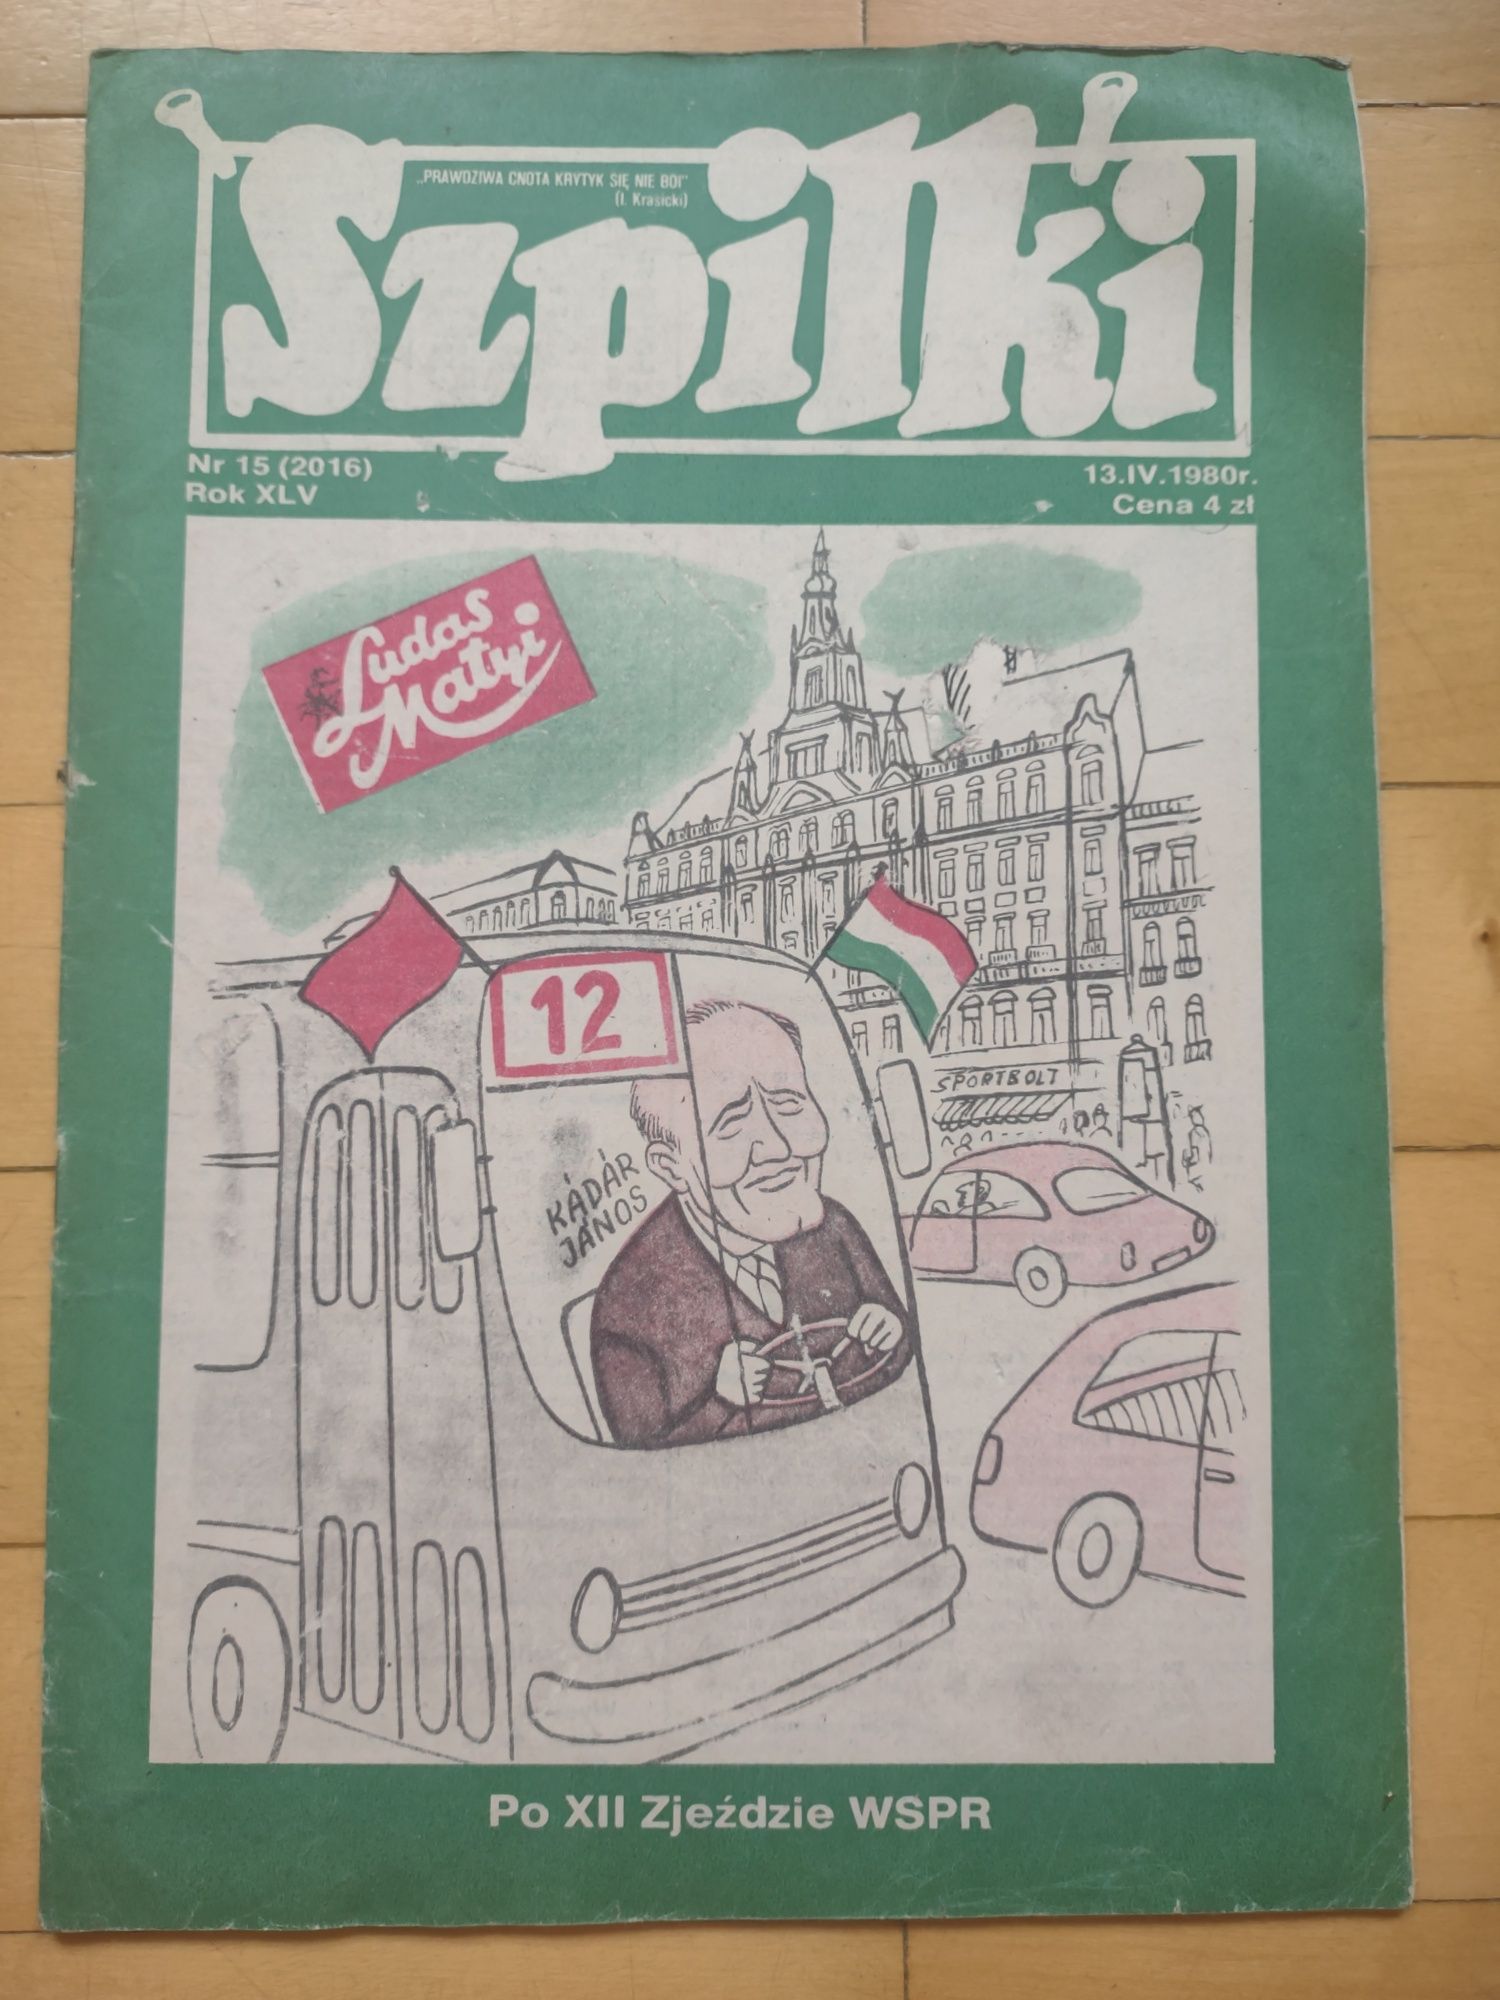 Czasopismo Szpilki  Nr 15 (2016) Rok XLV 13.IV.1980